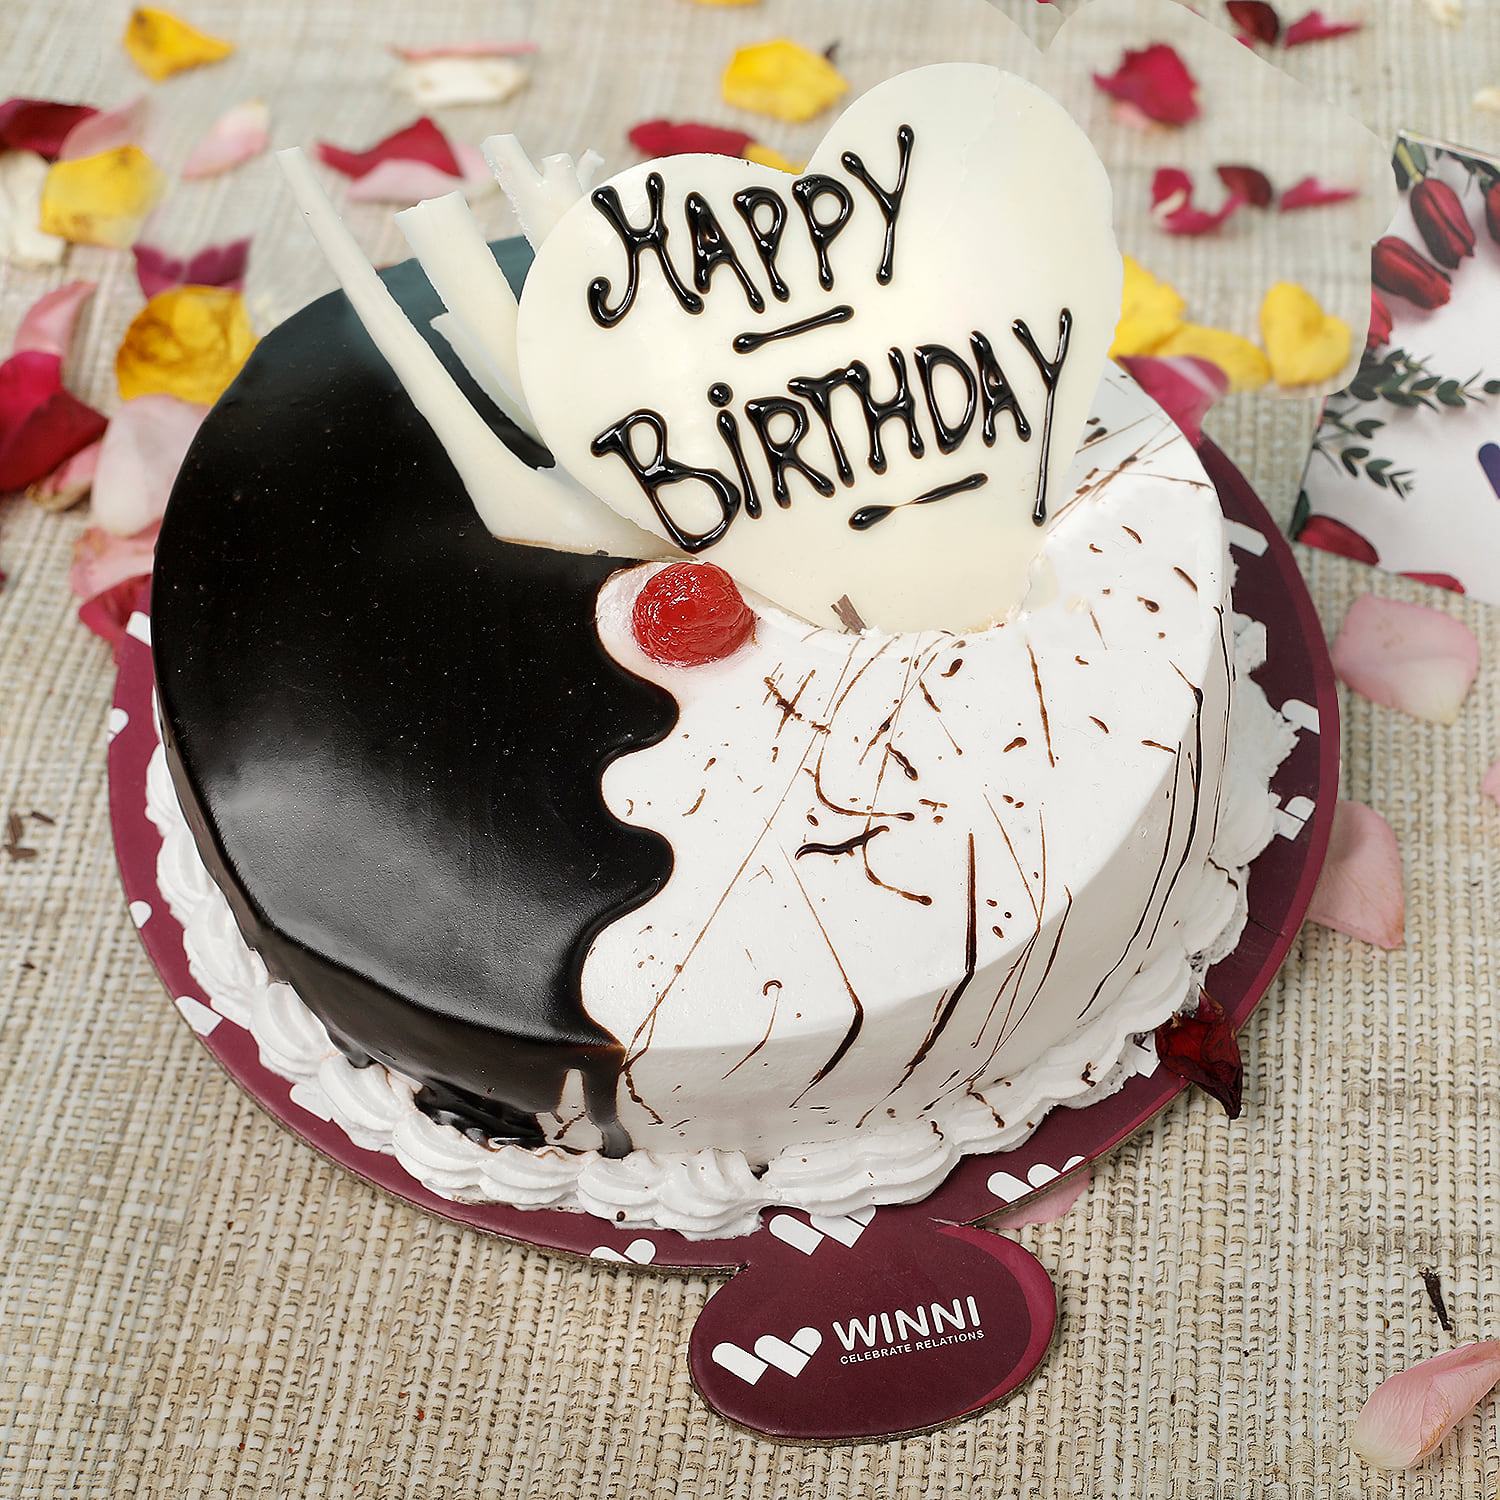 Online Birthday Cakes for Sister | Send Birthday Cake To Sister | FlowerAura